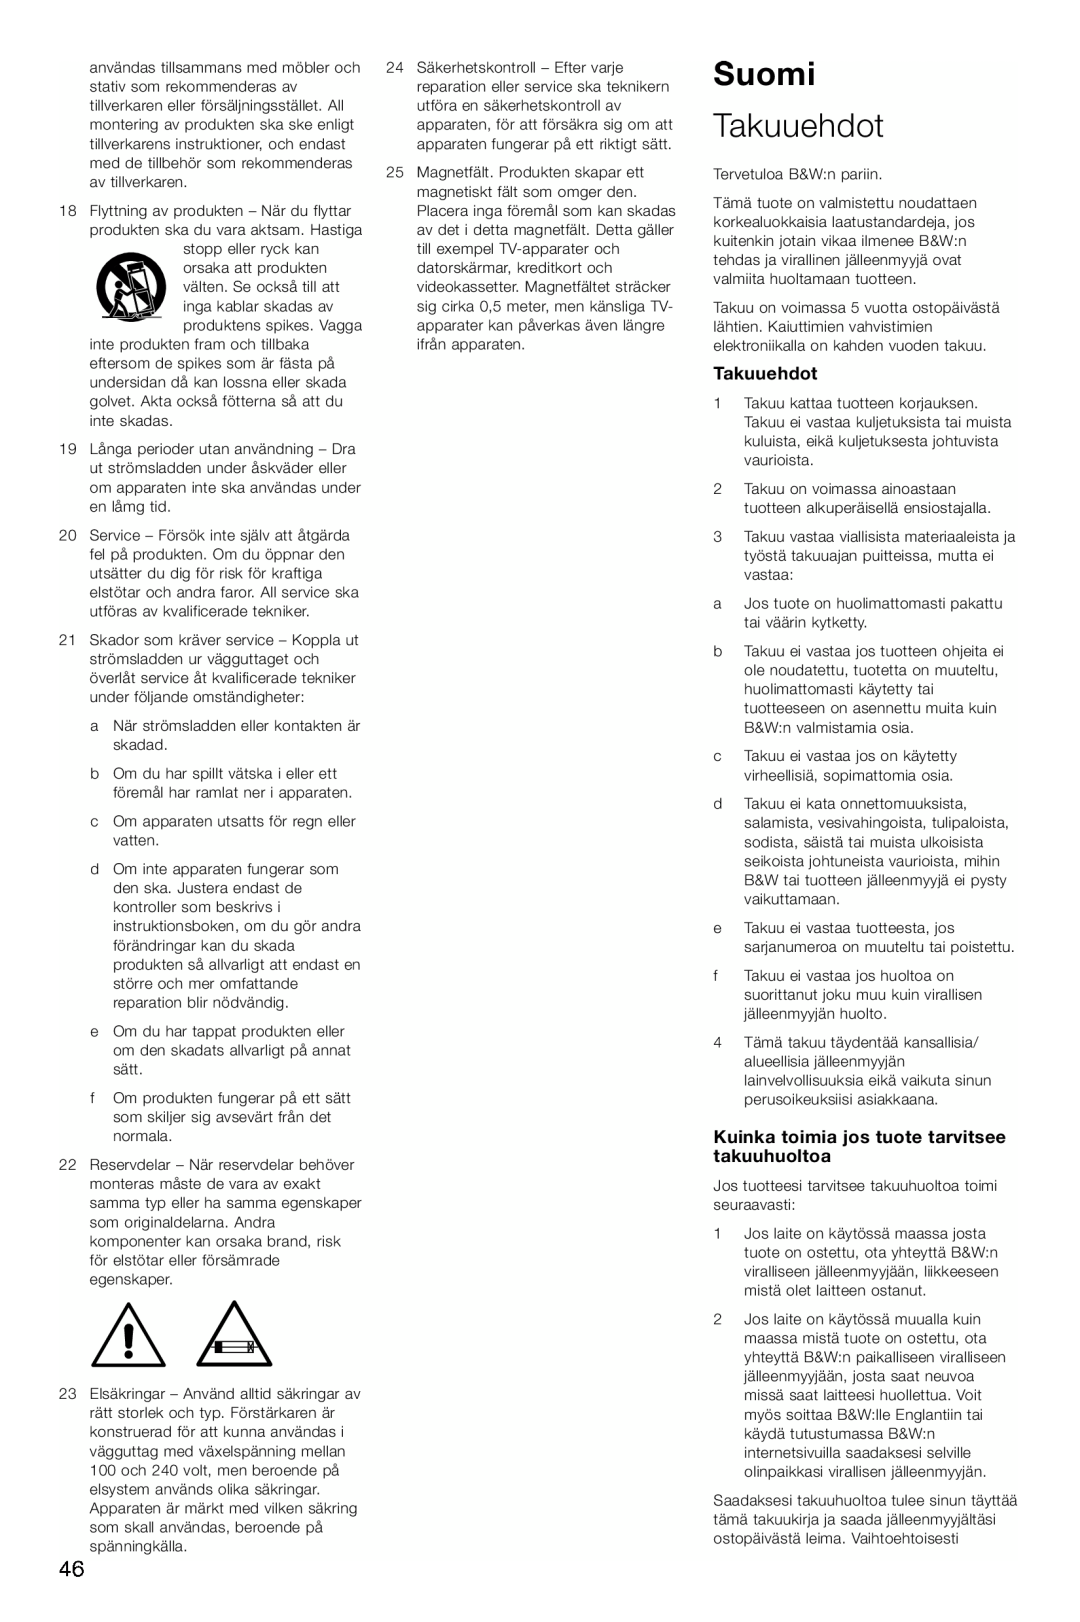 Bowers & Wilkins ASW675 owner manual Suomi, Takuuehdot, Kuinka toimia jos tuote tarvitsee takuuhuoltoa 